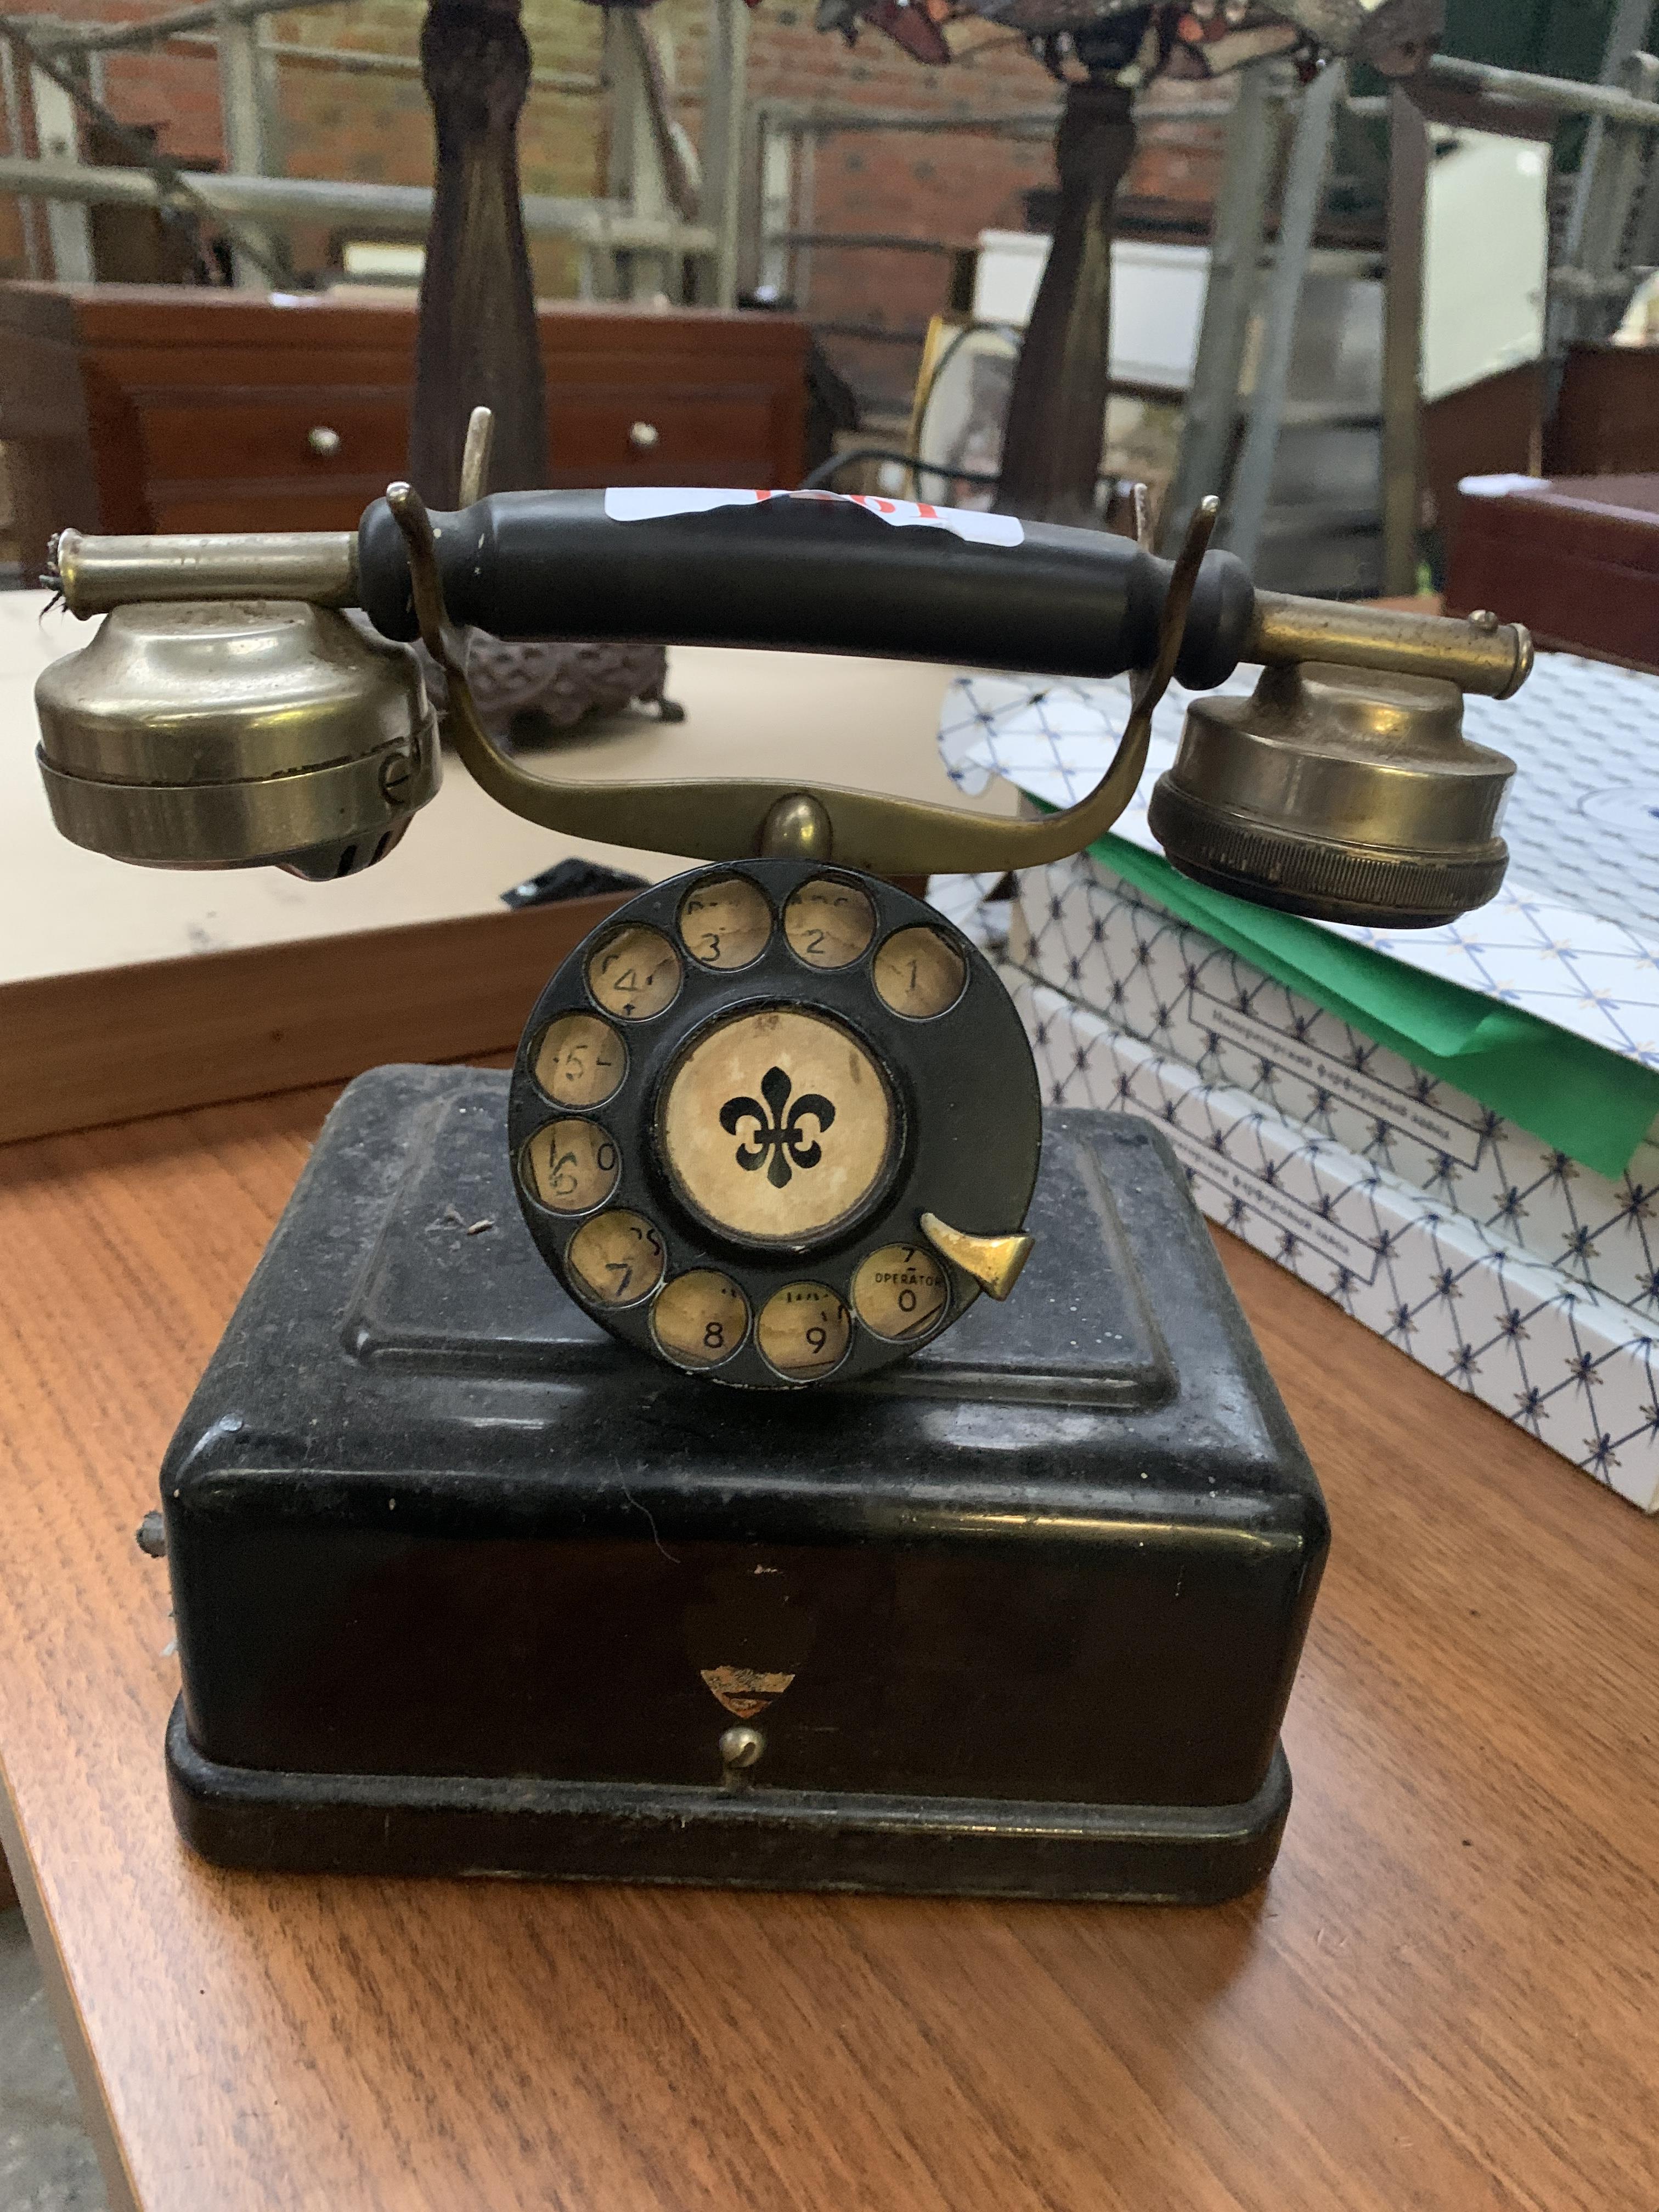 A Swedish rotary dial telephone